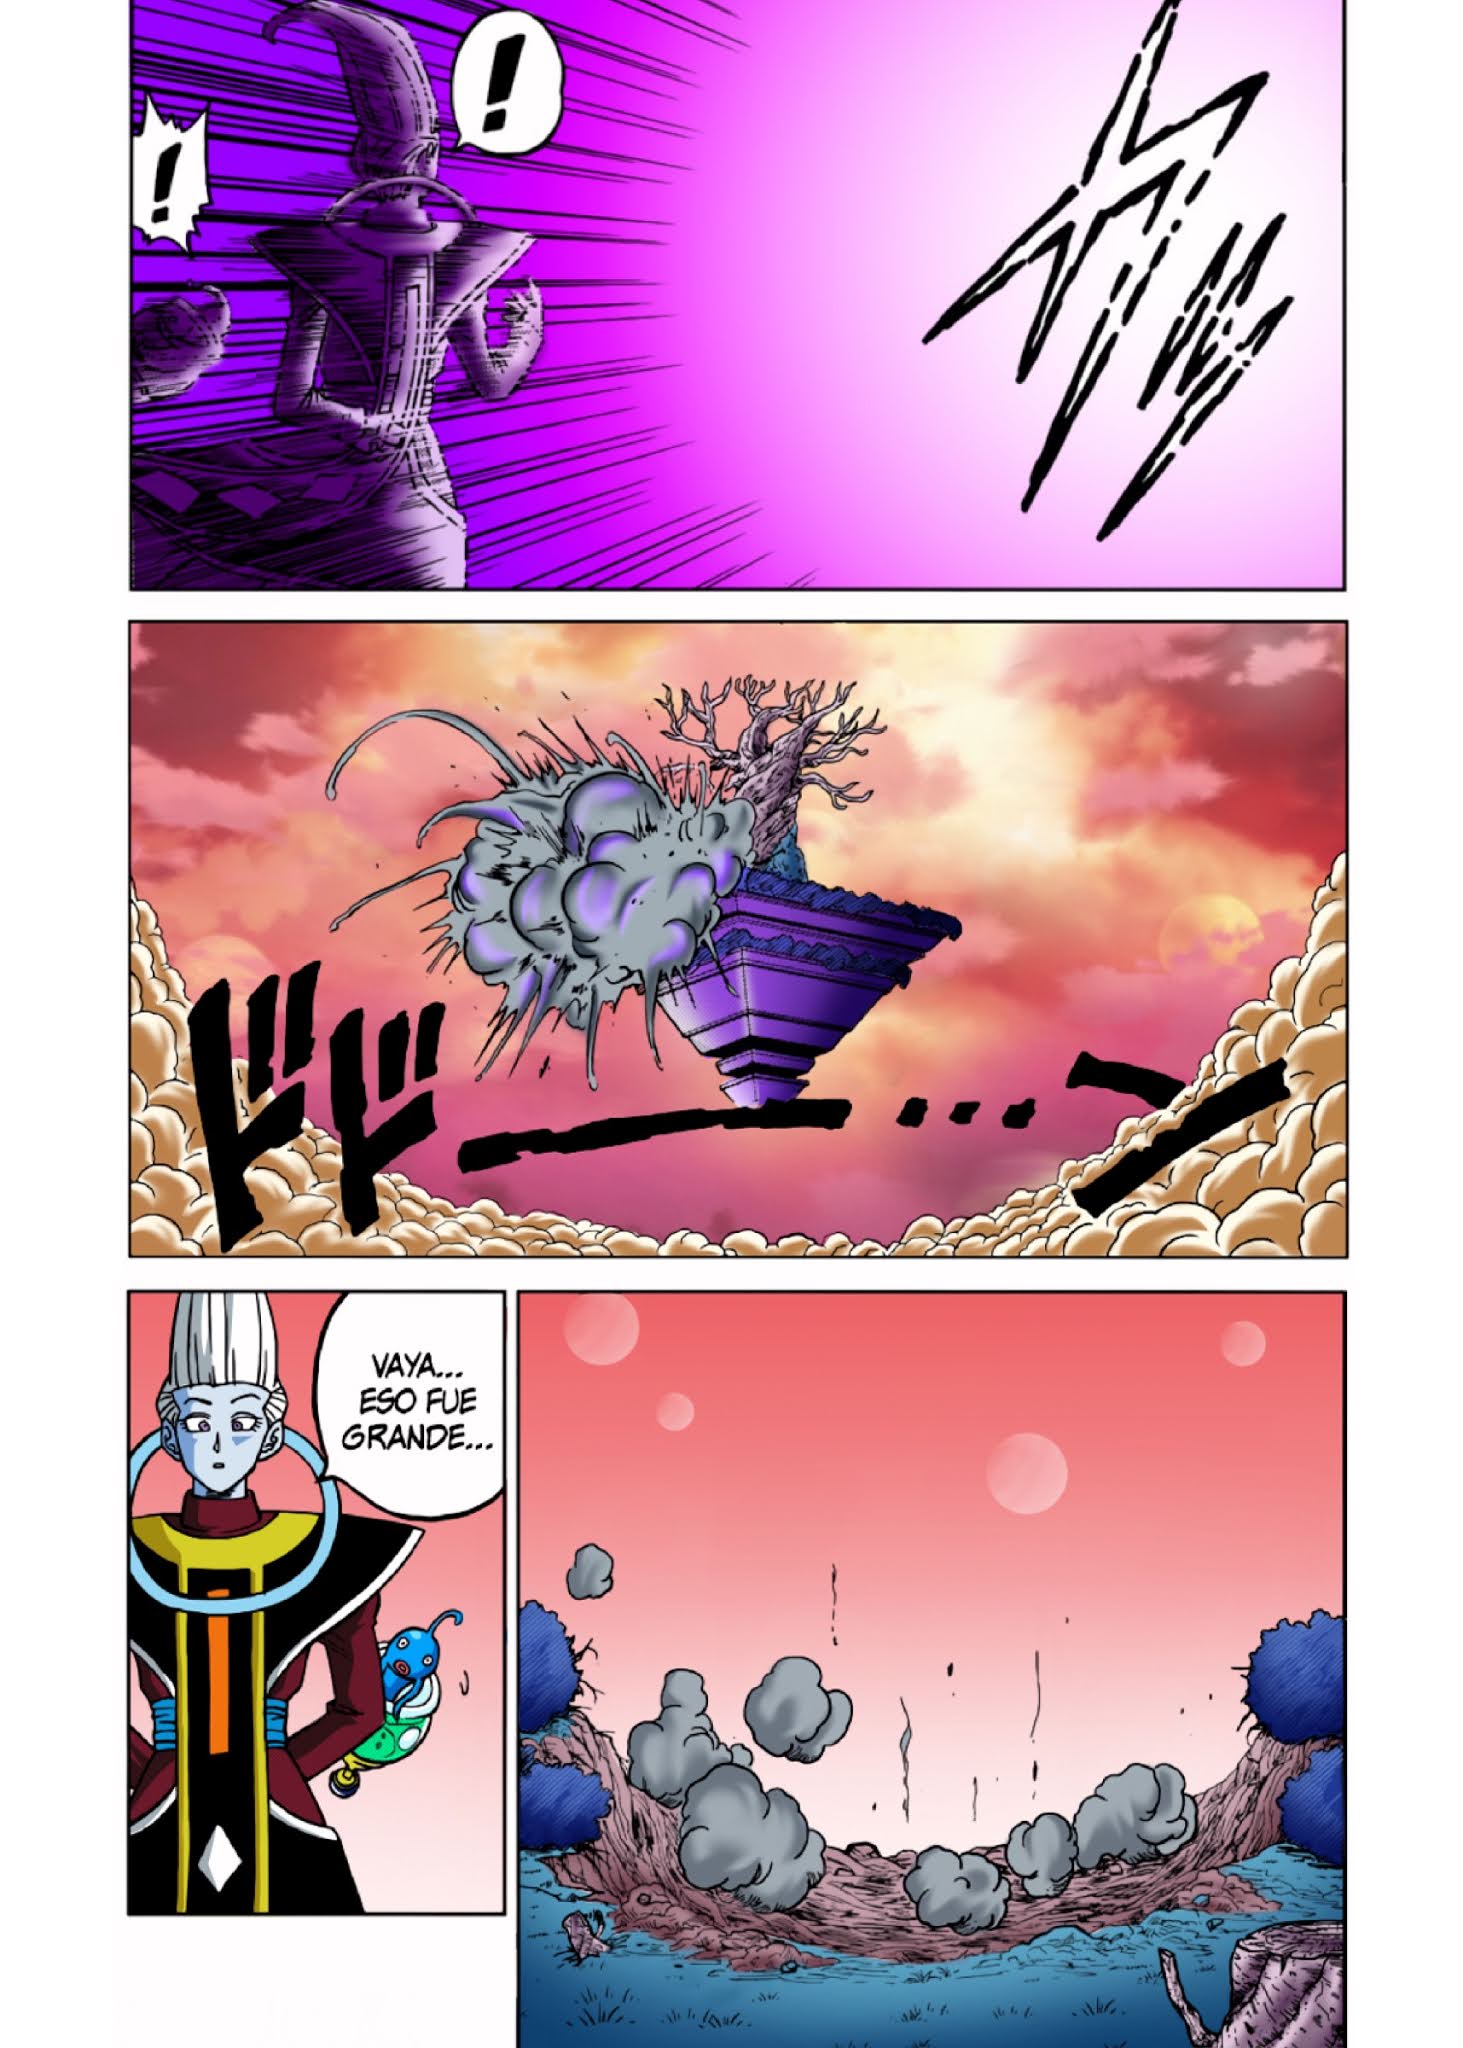 Dragon ball super manga 27 color (second page) by bolman2003JUMP